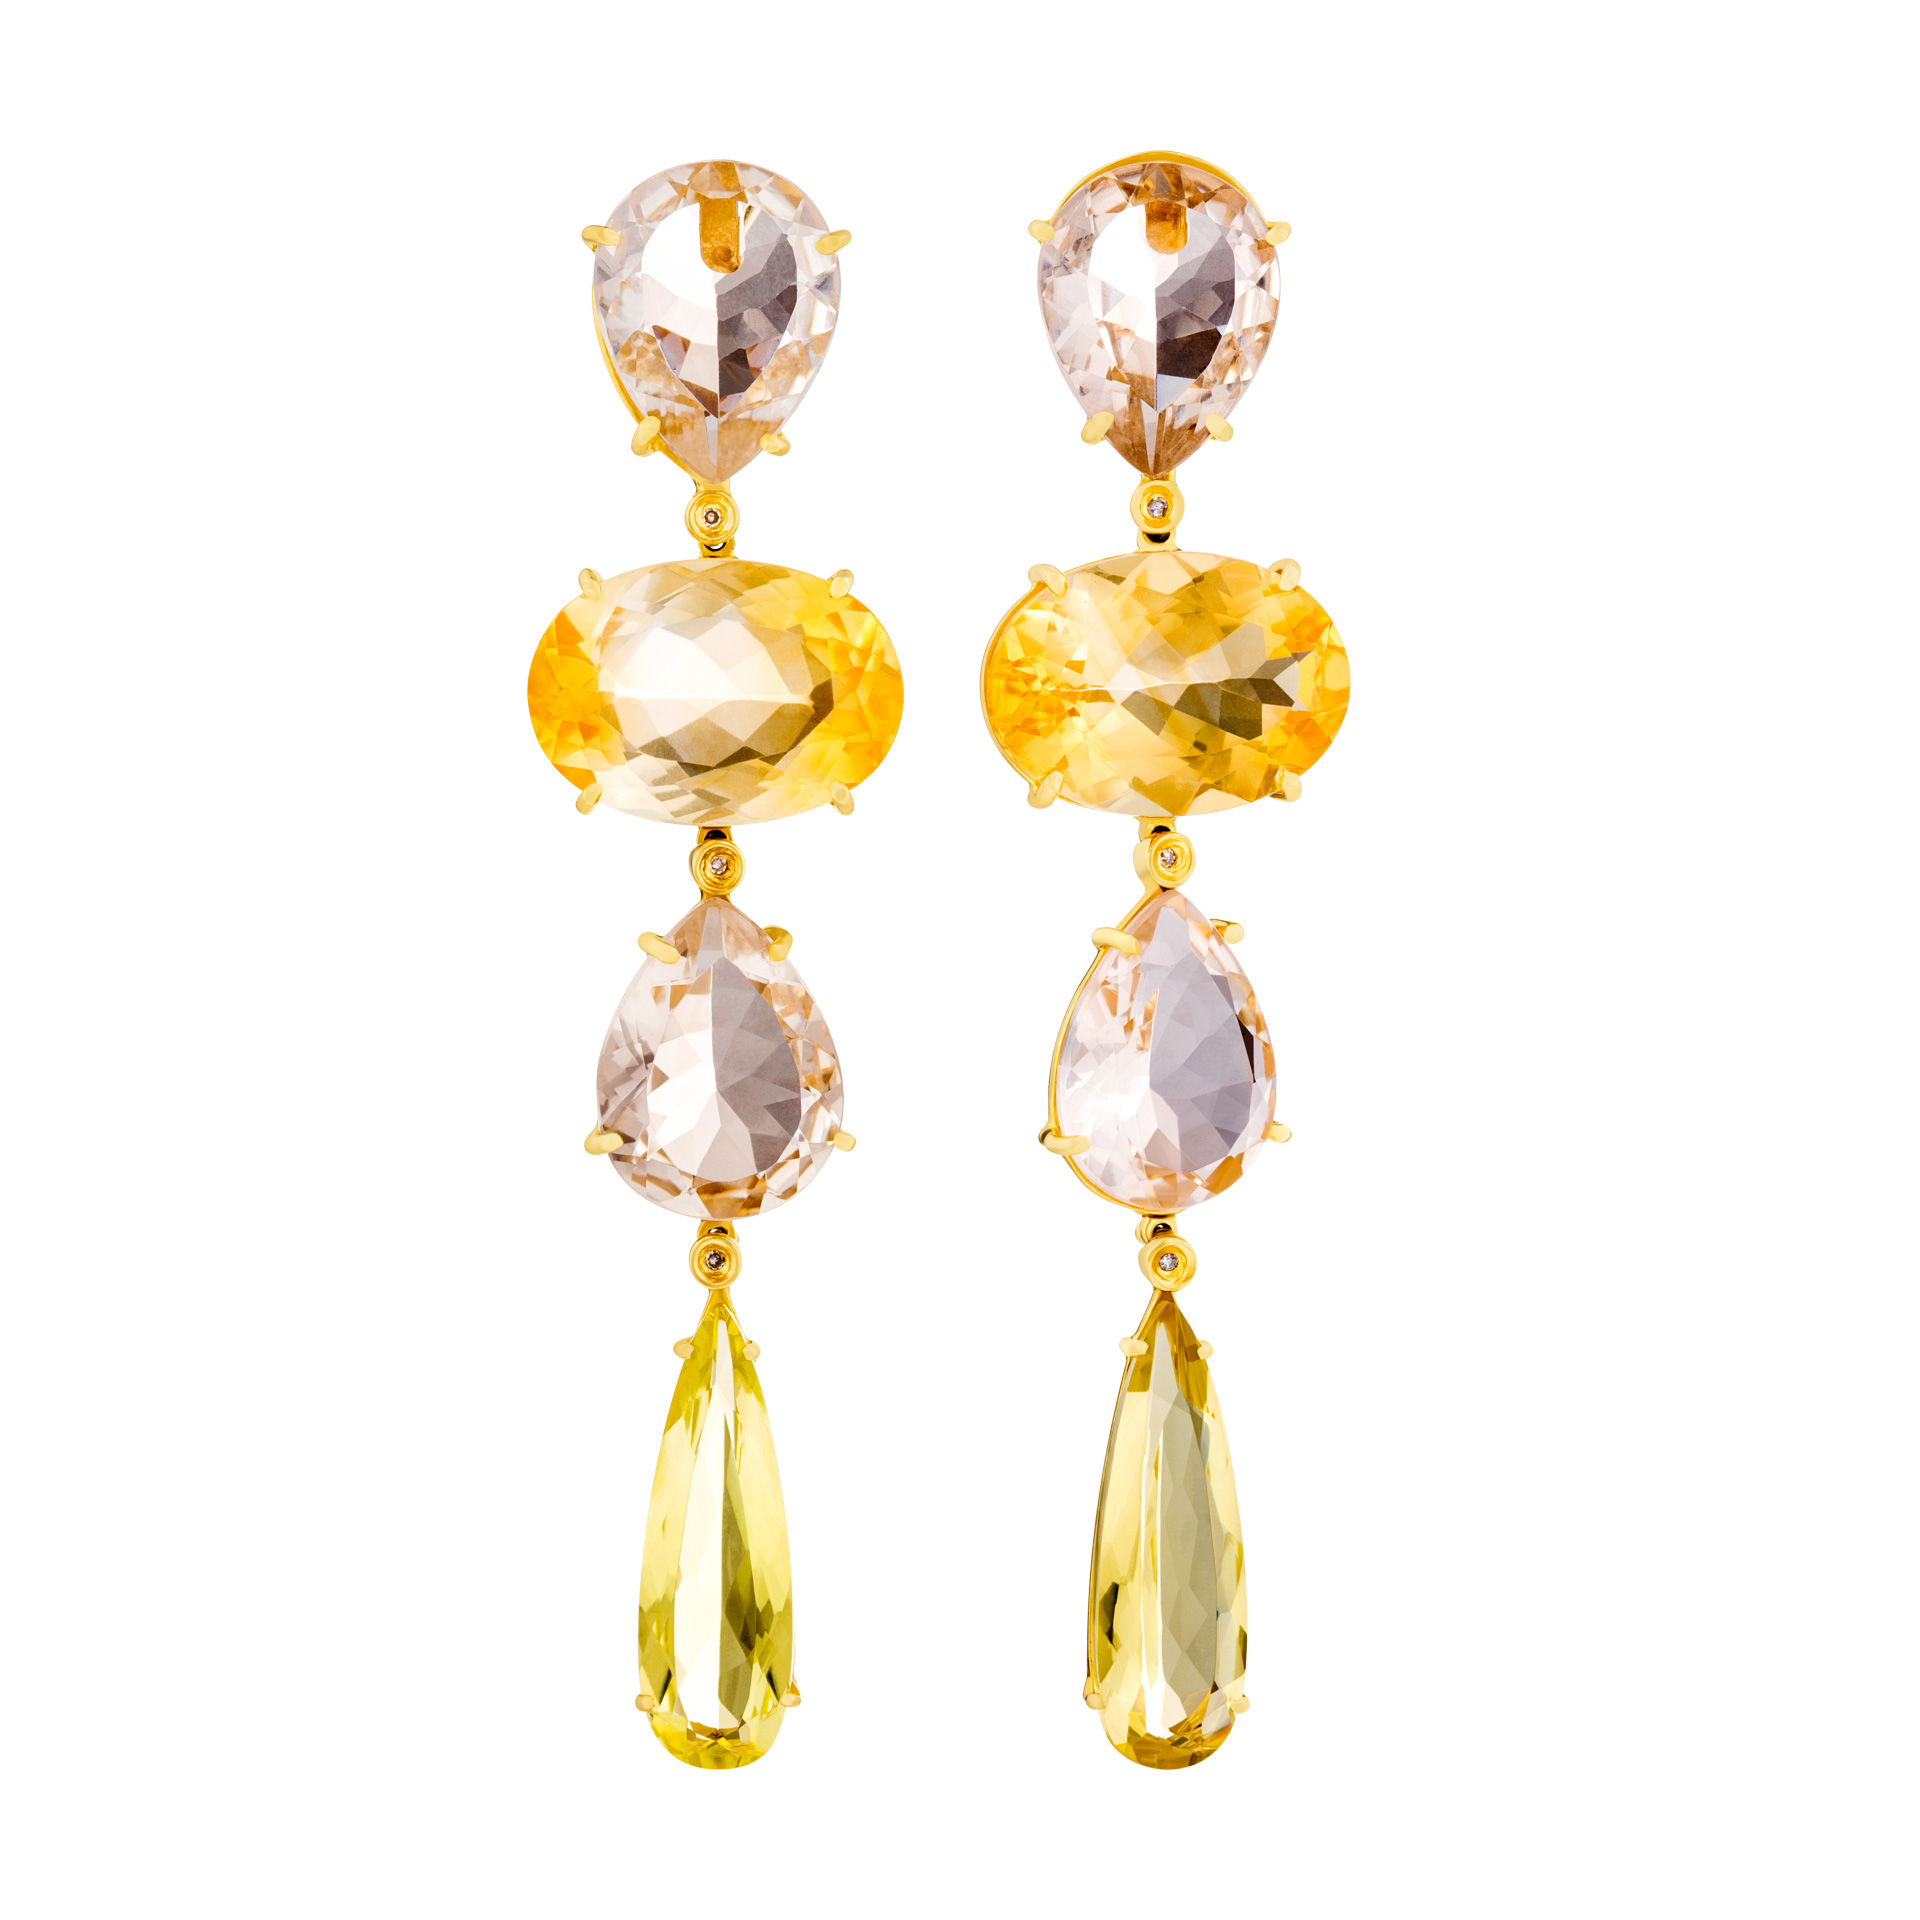 Topaz and smoky quartz dangle earrings in 18k gold